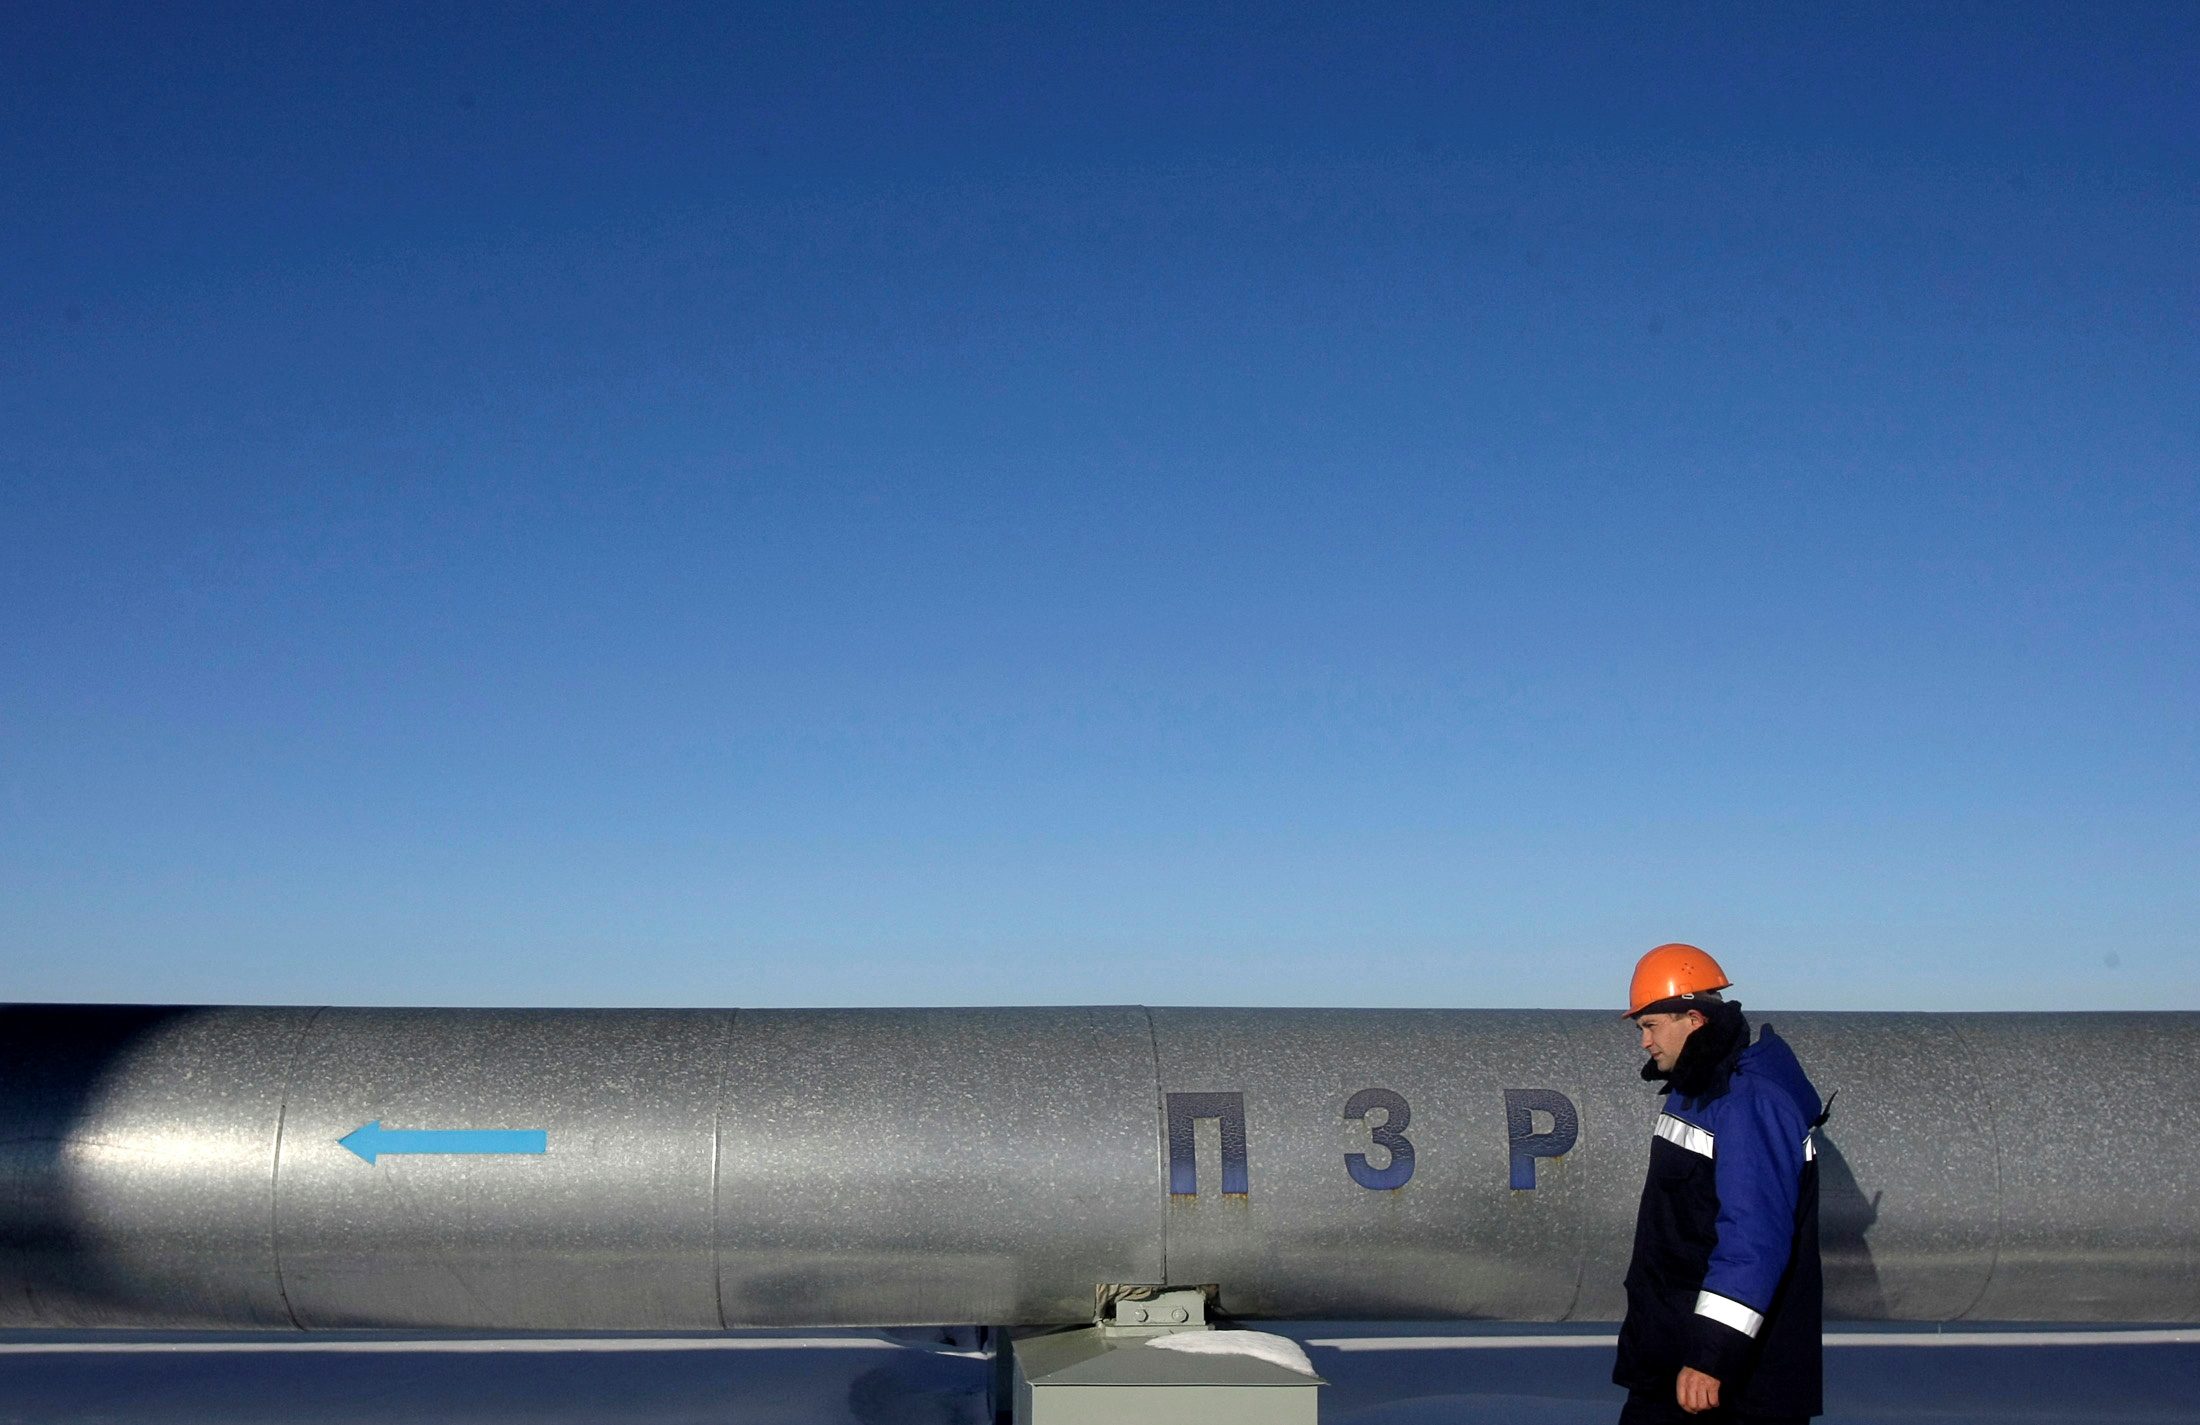 Rally around Putin to save Russia, Gazprom chief Miller says